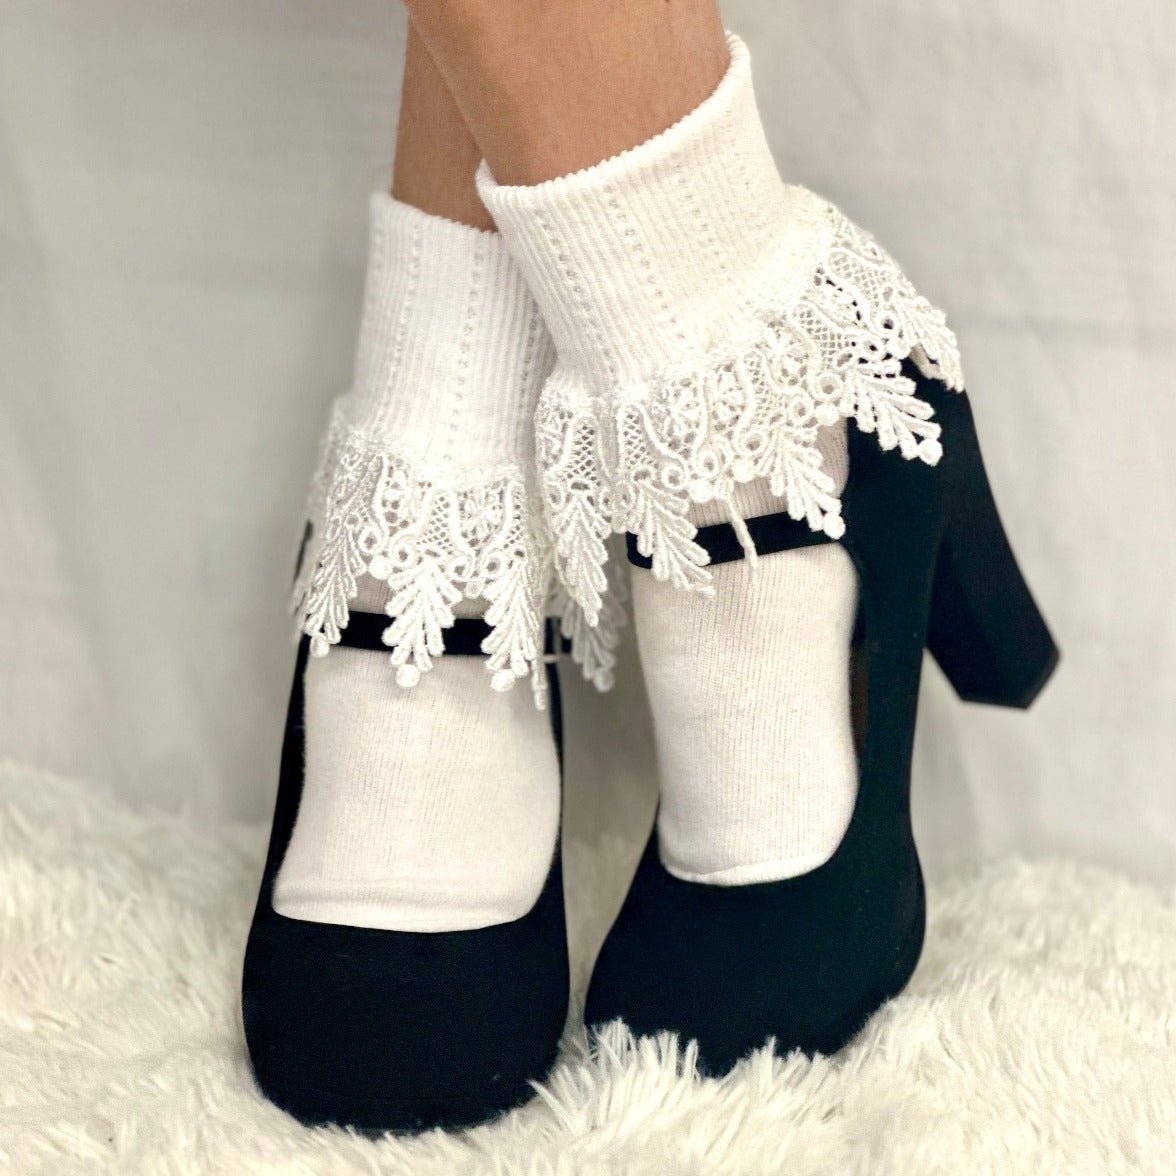 Original signature lace cuff socks women's, made in usa socks ladies